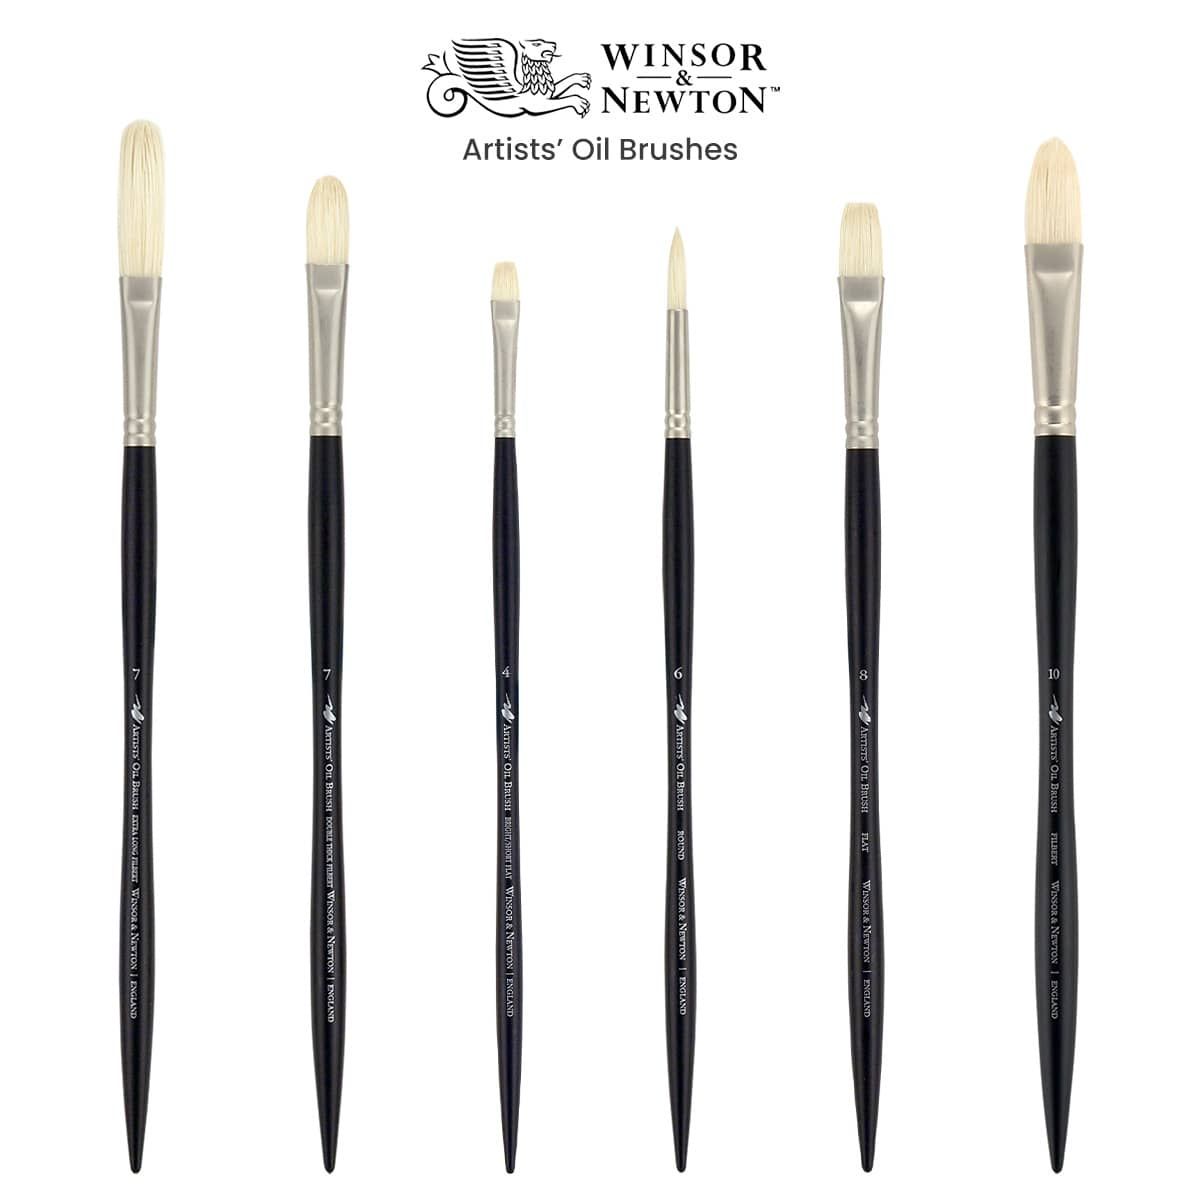 Winsor & Newton Brushes buy online